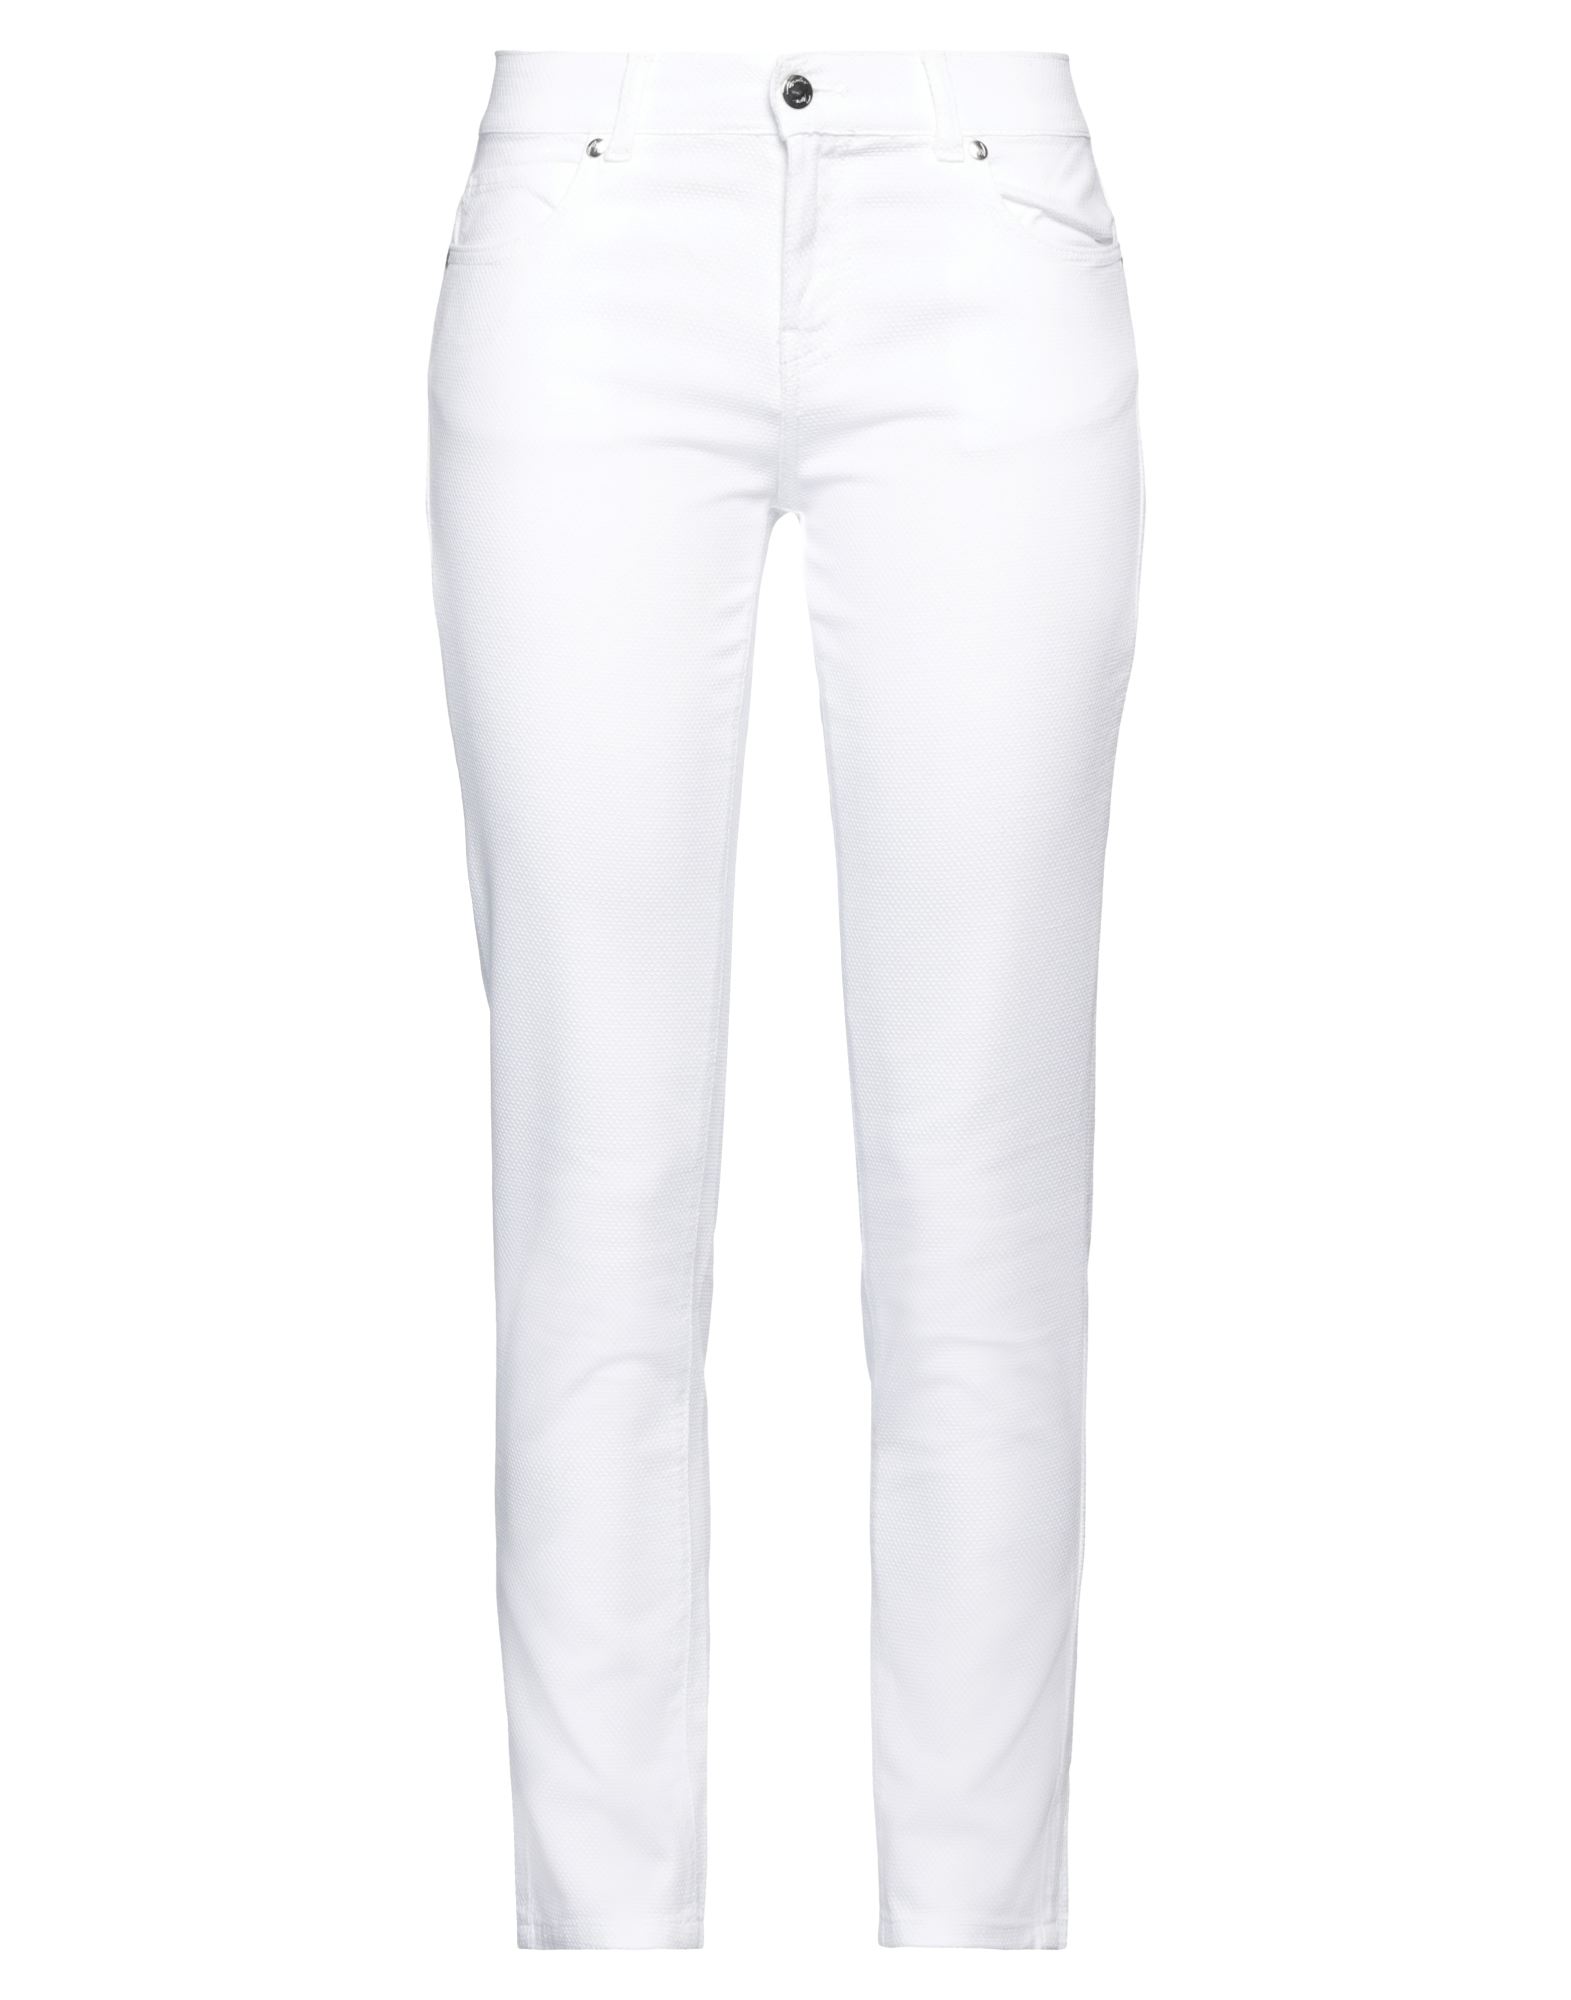 Brebis Noir Pants In White